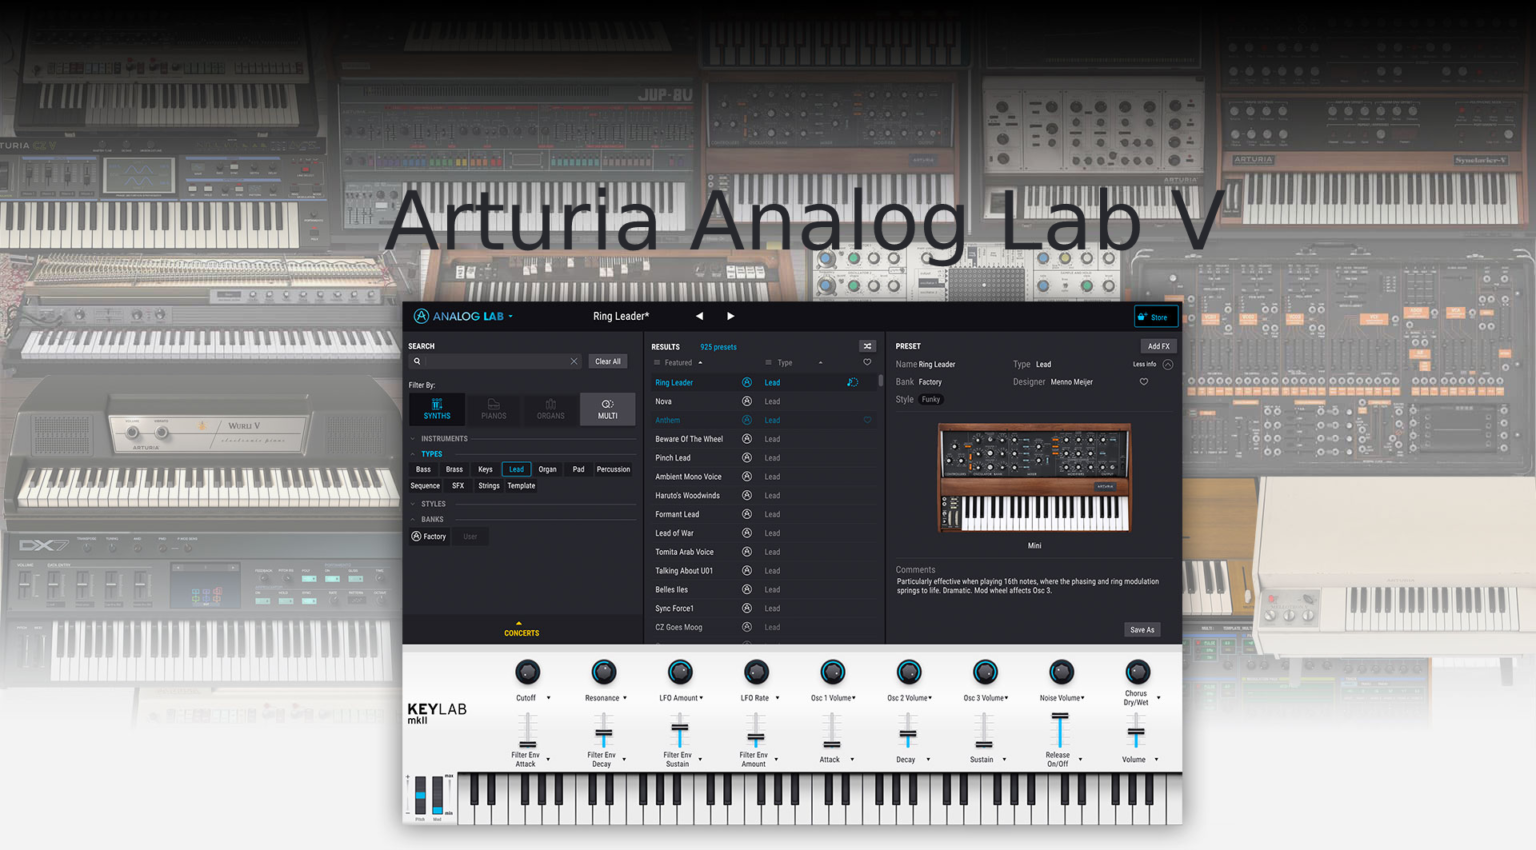 instal Arturia Analog lab V free